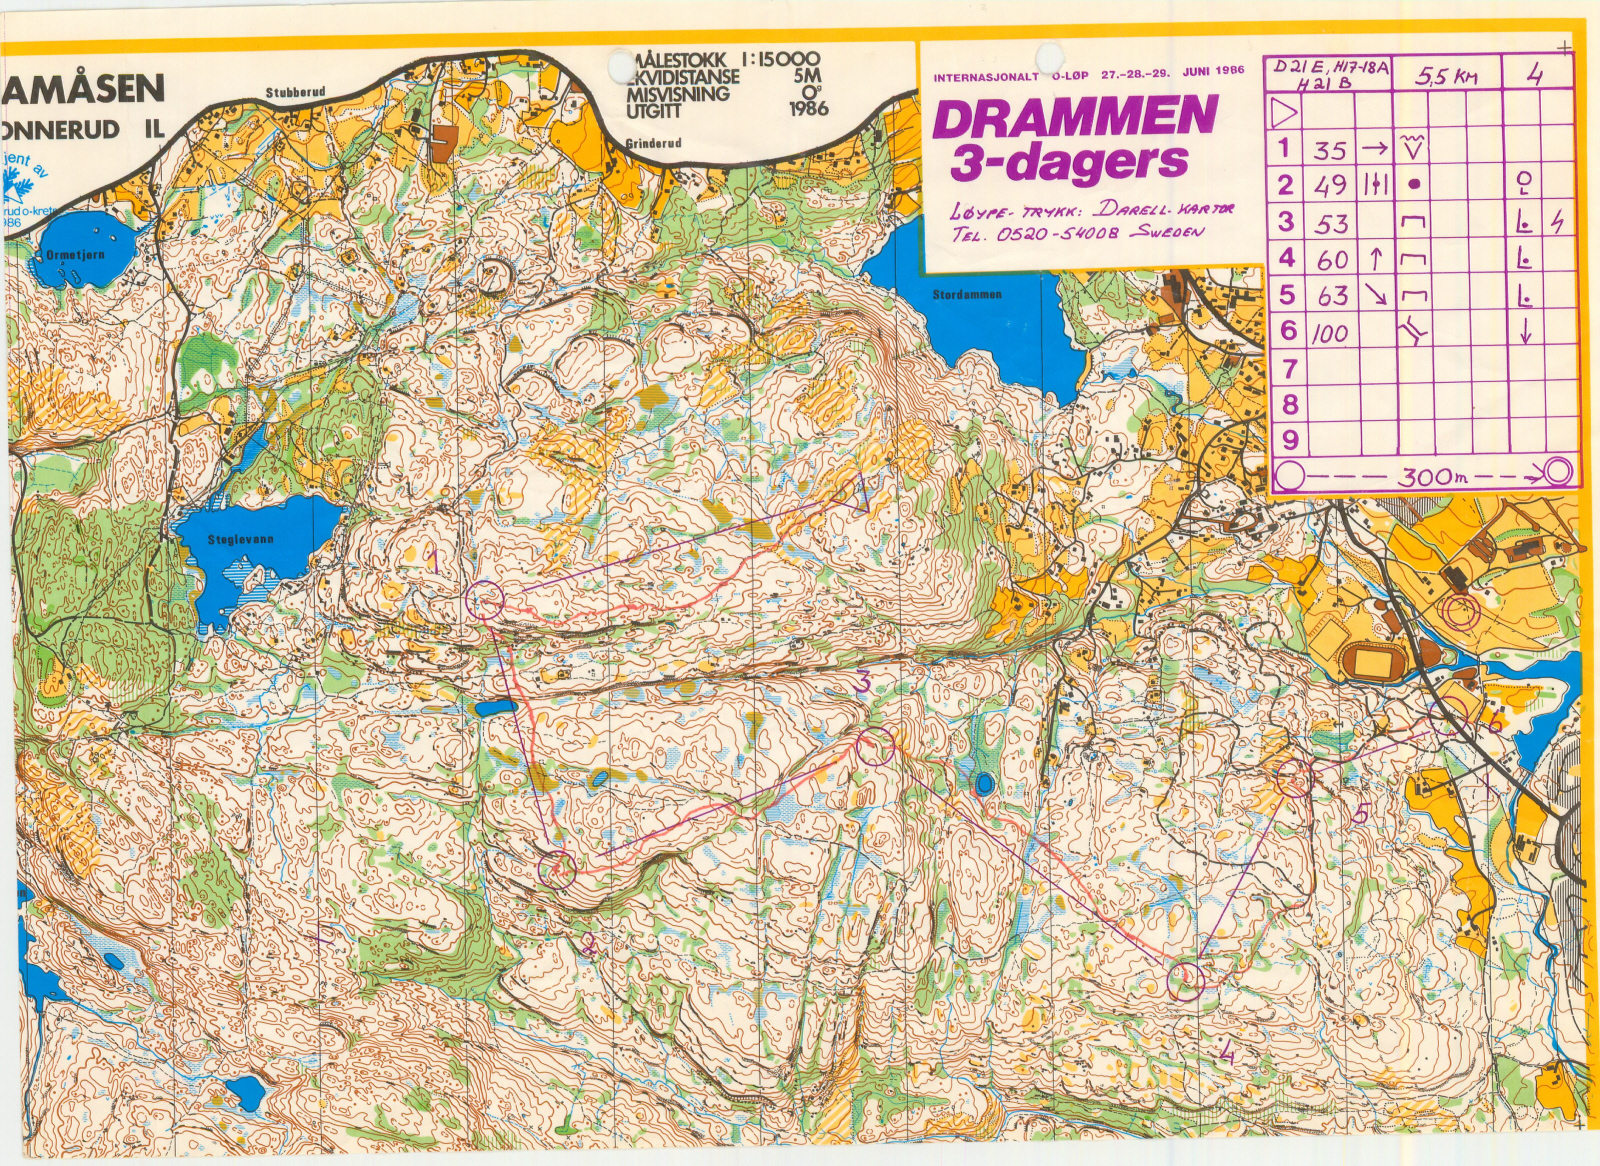 Drammen 3-dagers etappe 3 (1986-06-29)